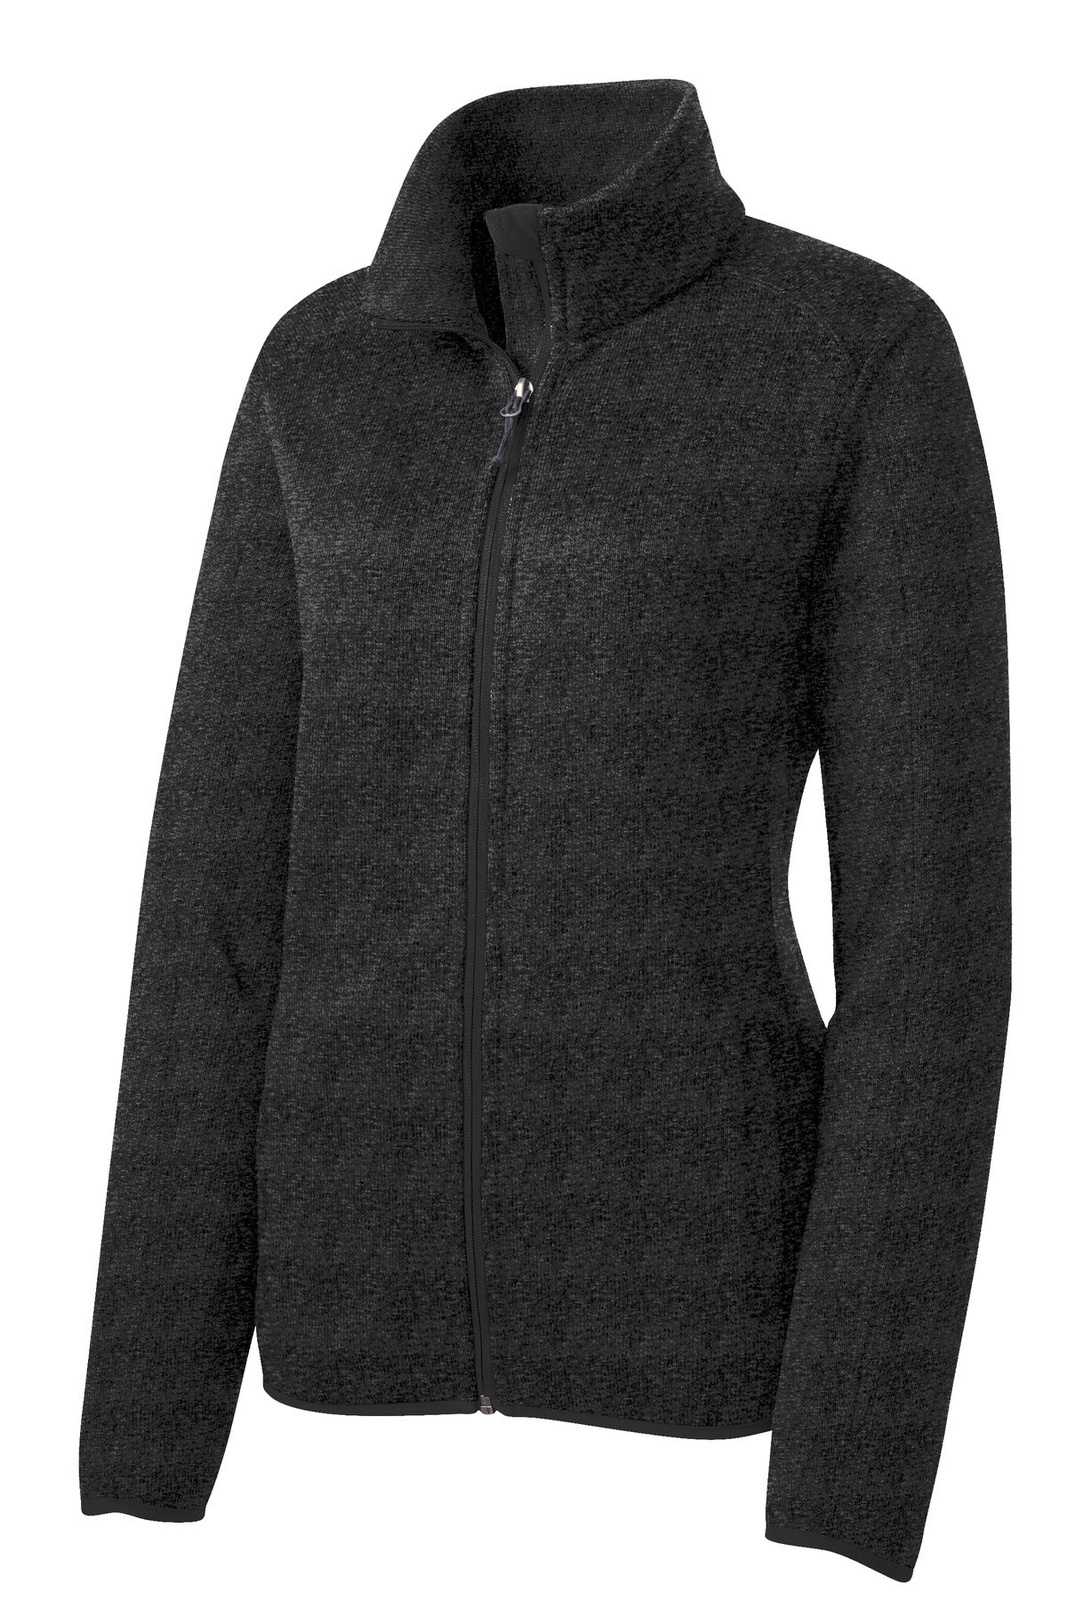 Port Authority L232 Ladies Sweater Fleece Jacket - Black Heather - HIT a Double - 5